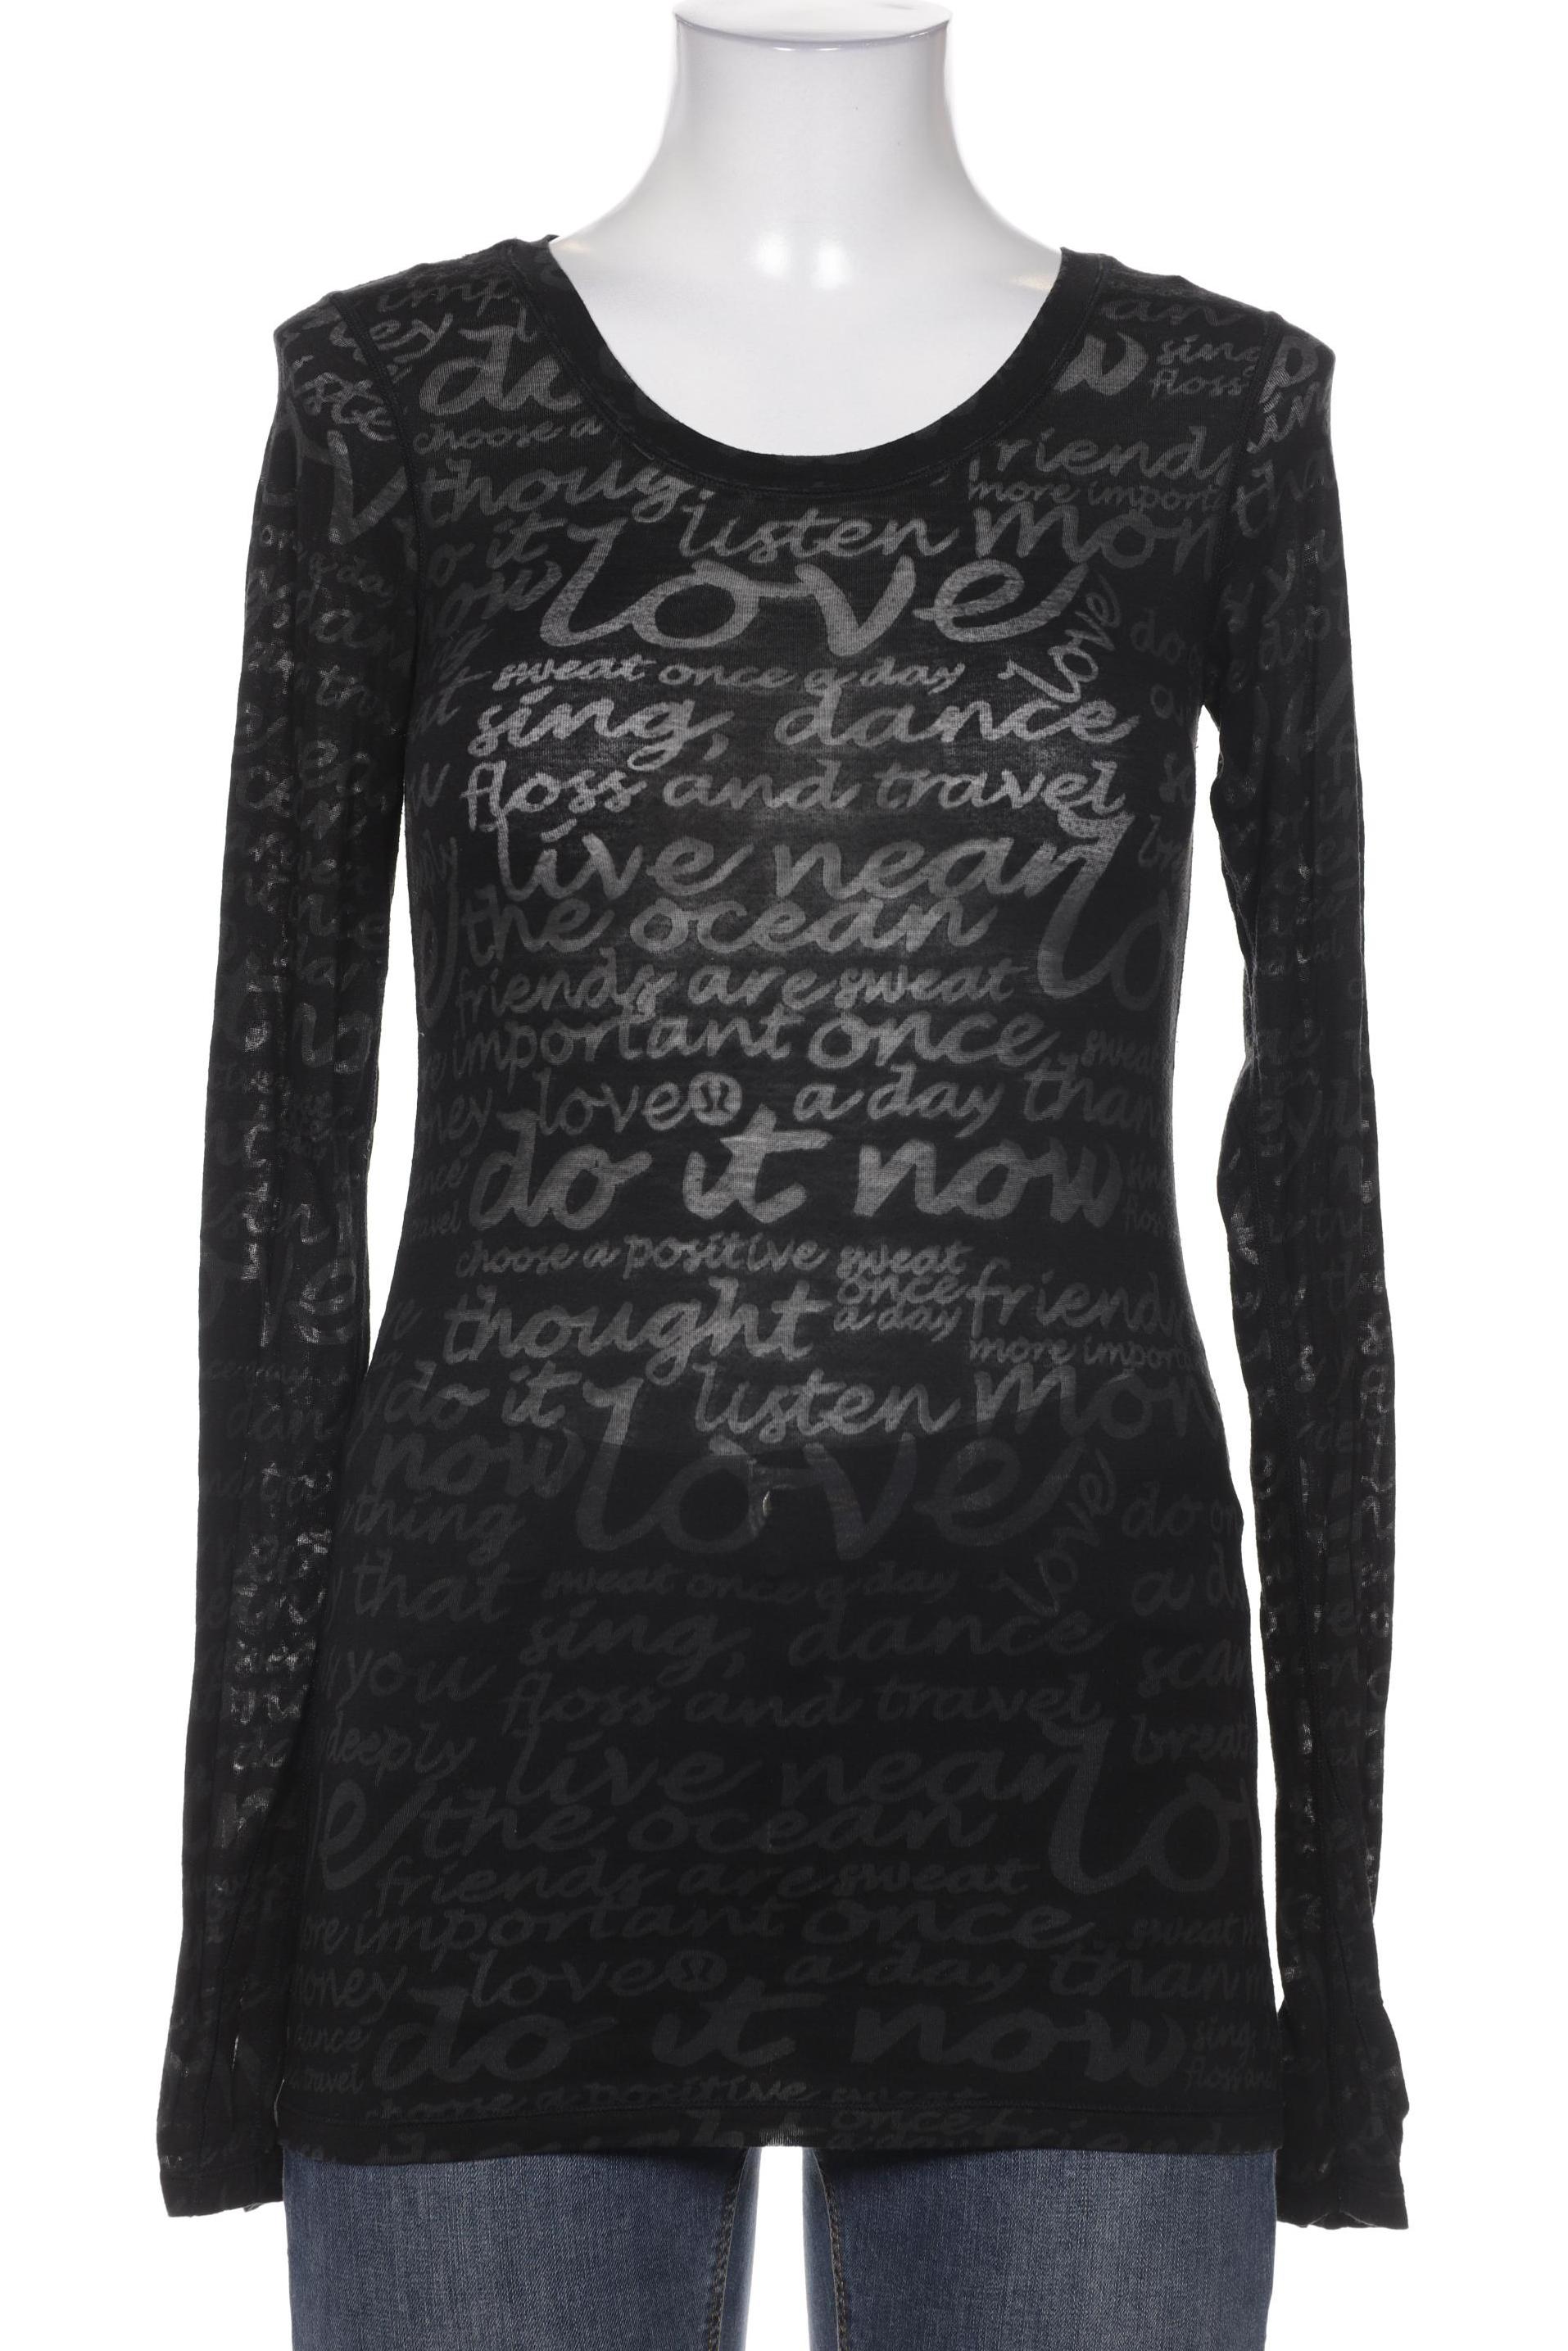 Lululemon Damen Langarmshirt, schwarz, Gr. 38 von Lululemon